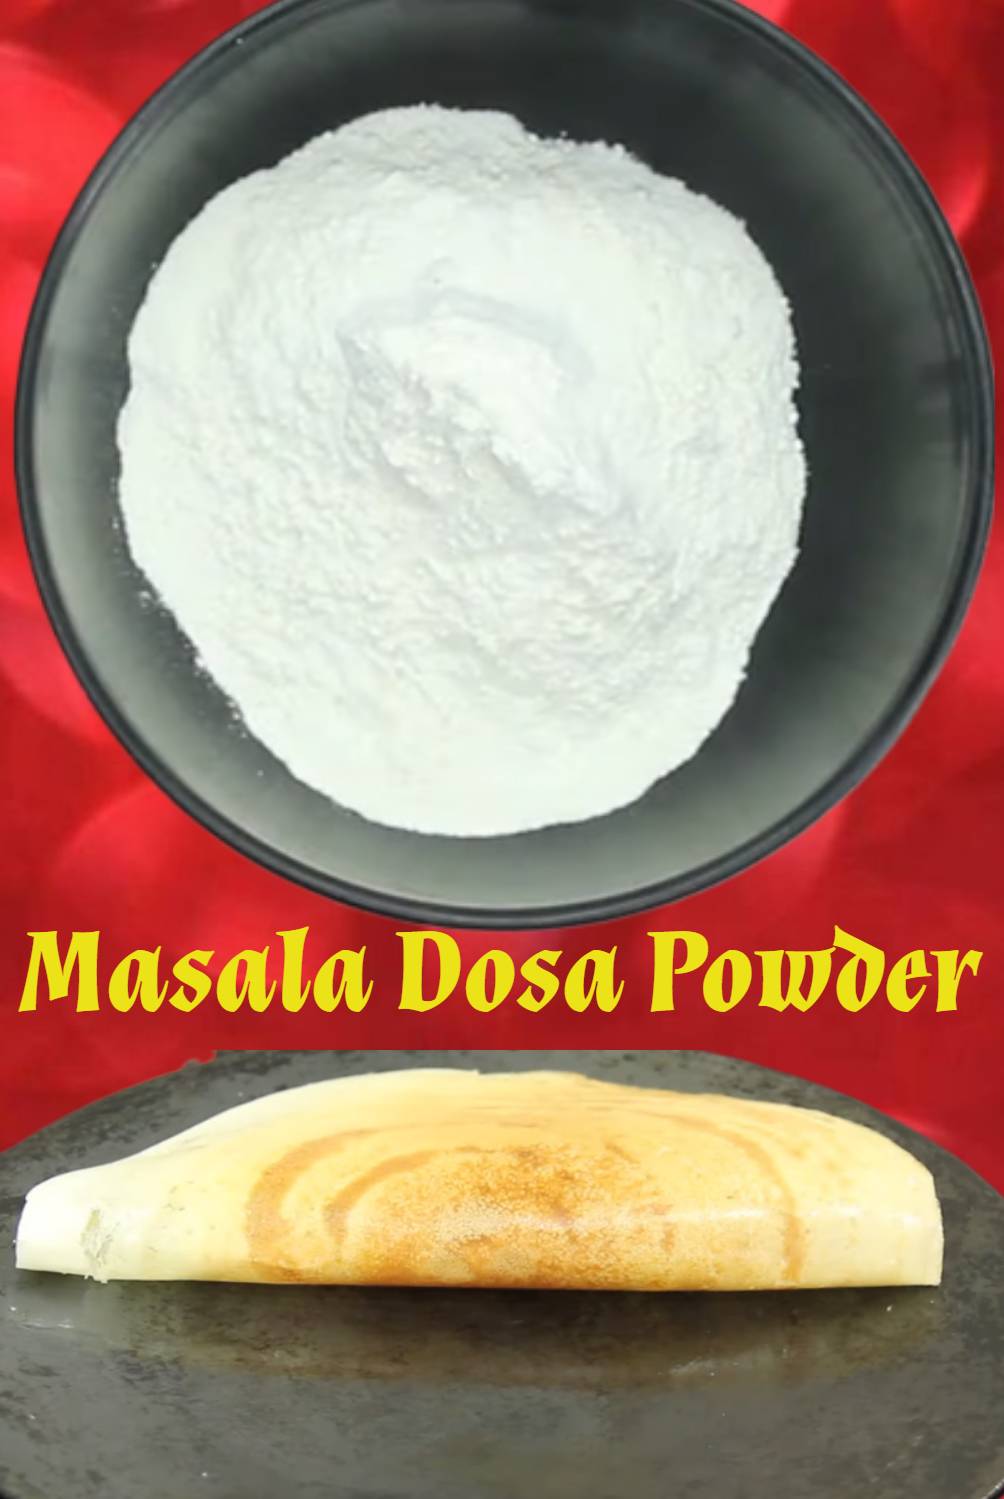 Masala Dosa Powder